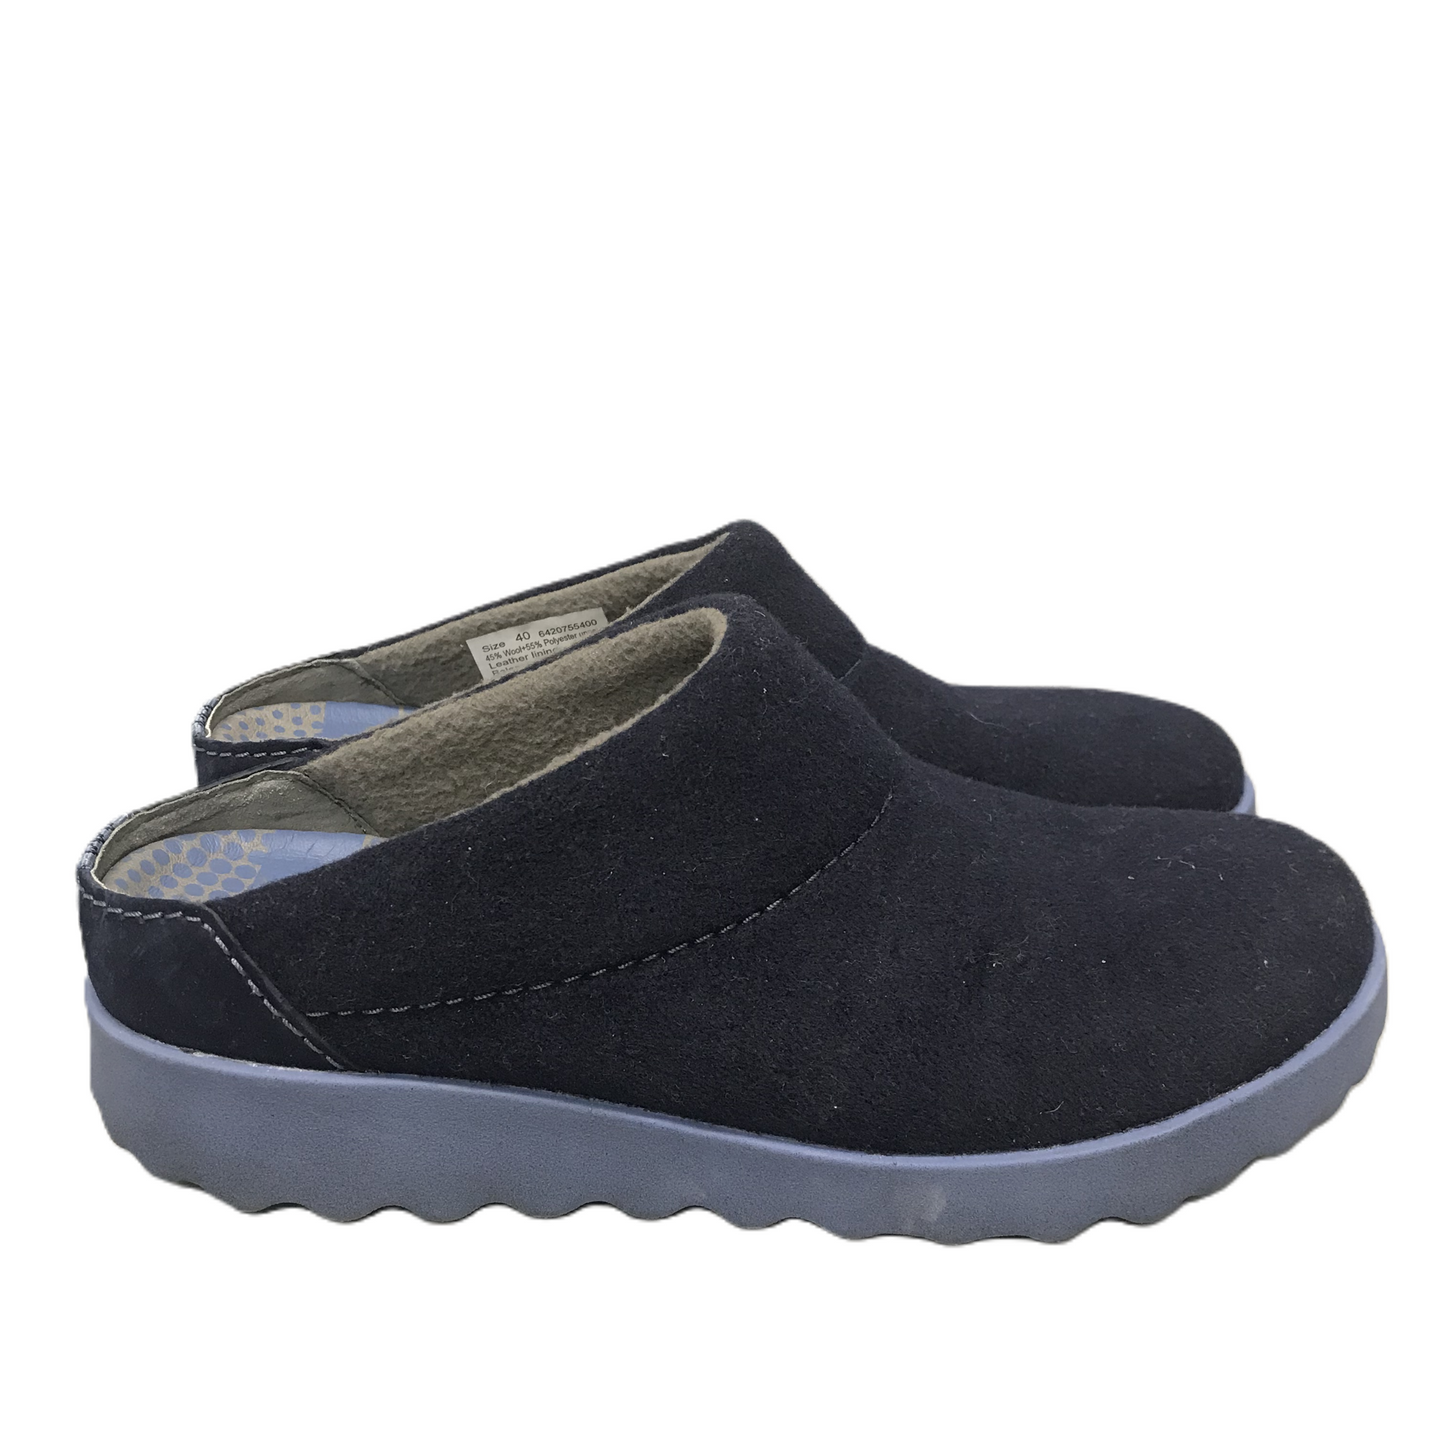 Blue Shoes Flats By Dansko, Size: 9.5